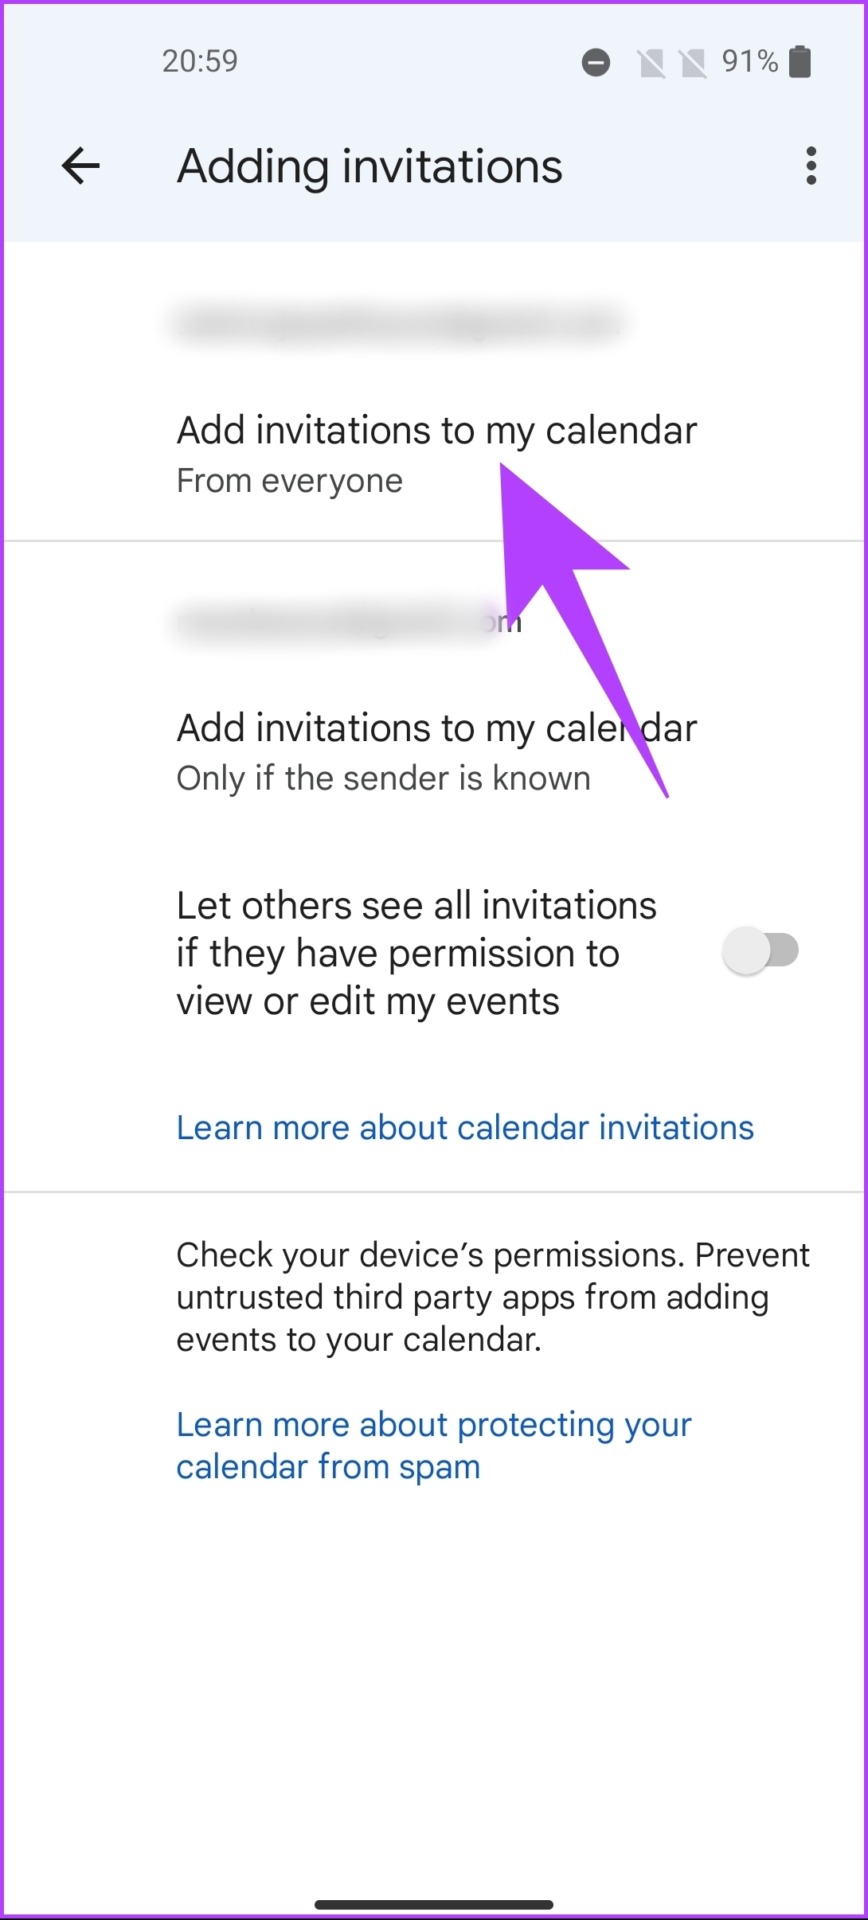 tap 'Add invitations to my calendar'